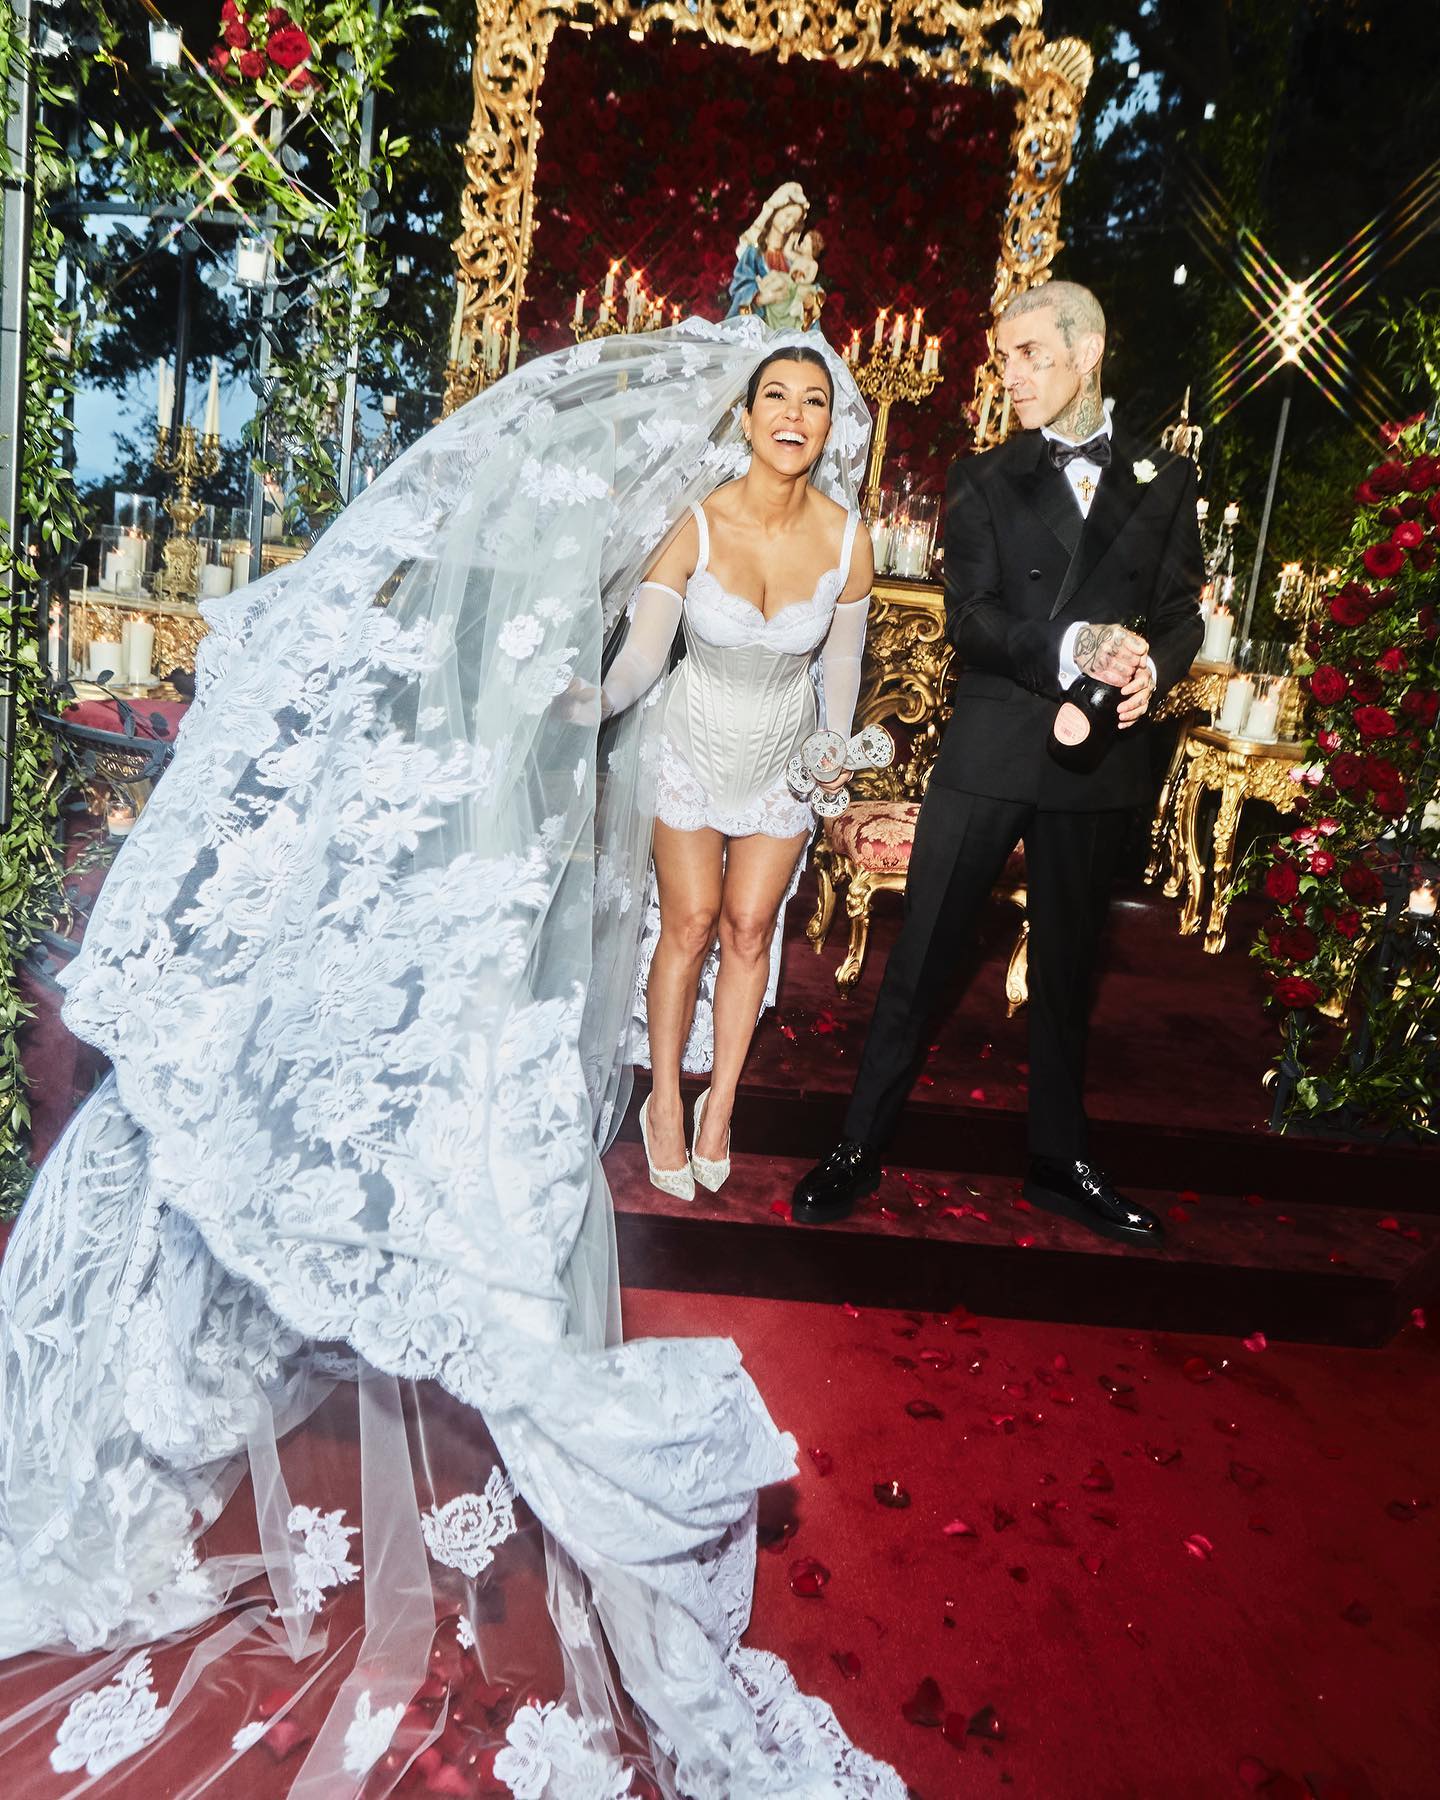 Kourtney Kardashian and Travis Barker at the alter on their wedding day